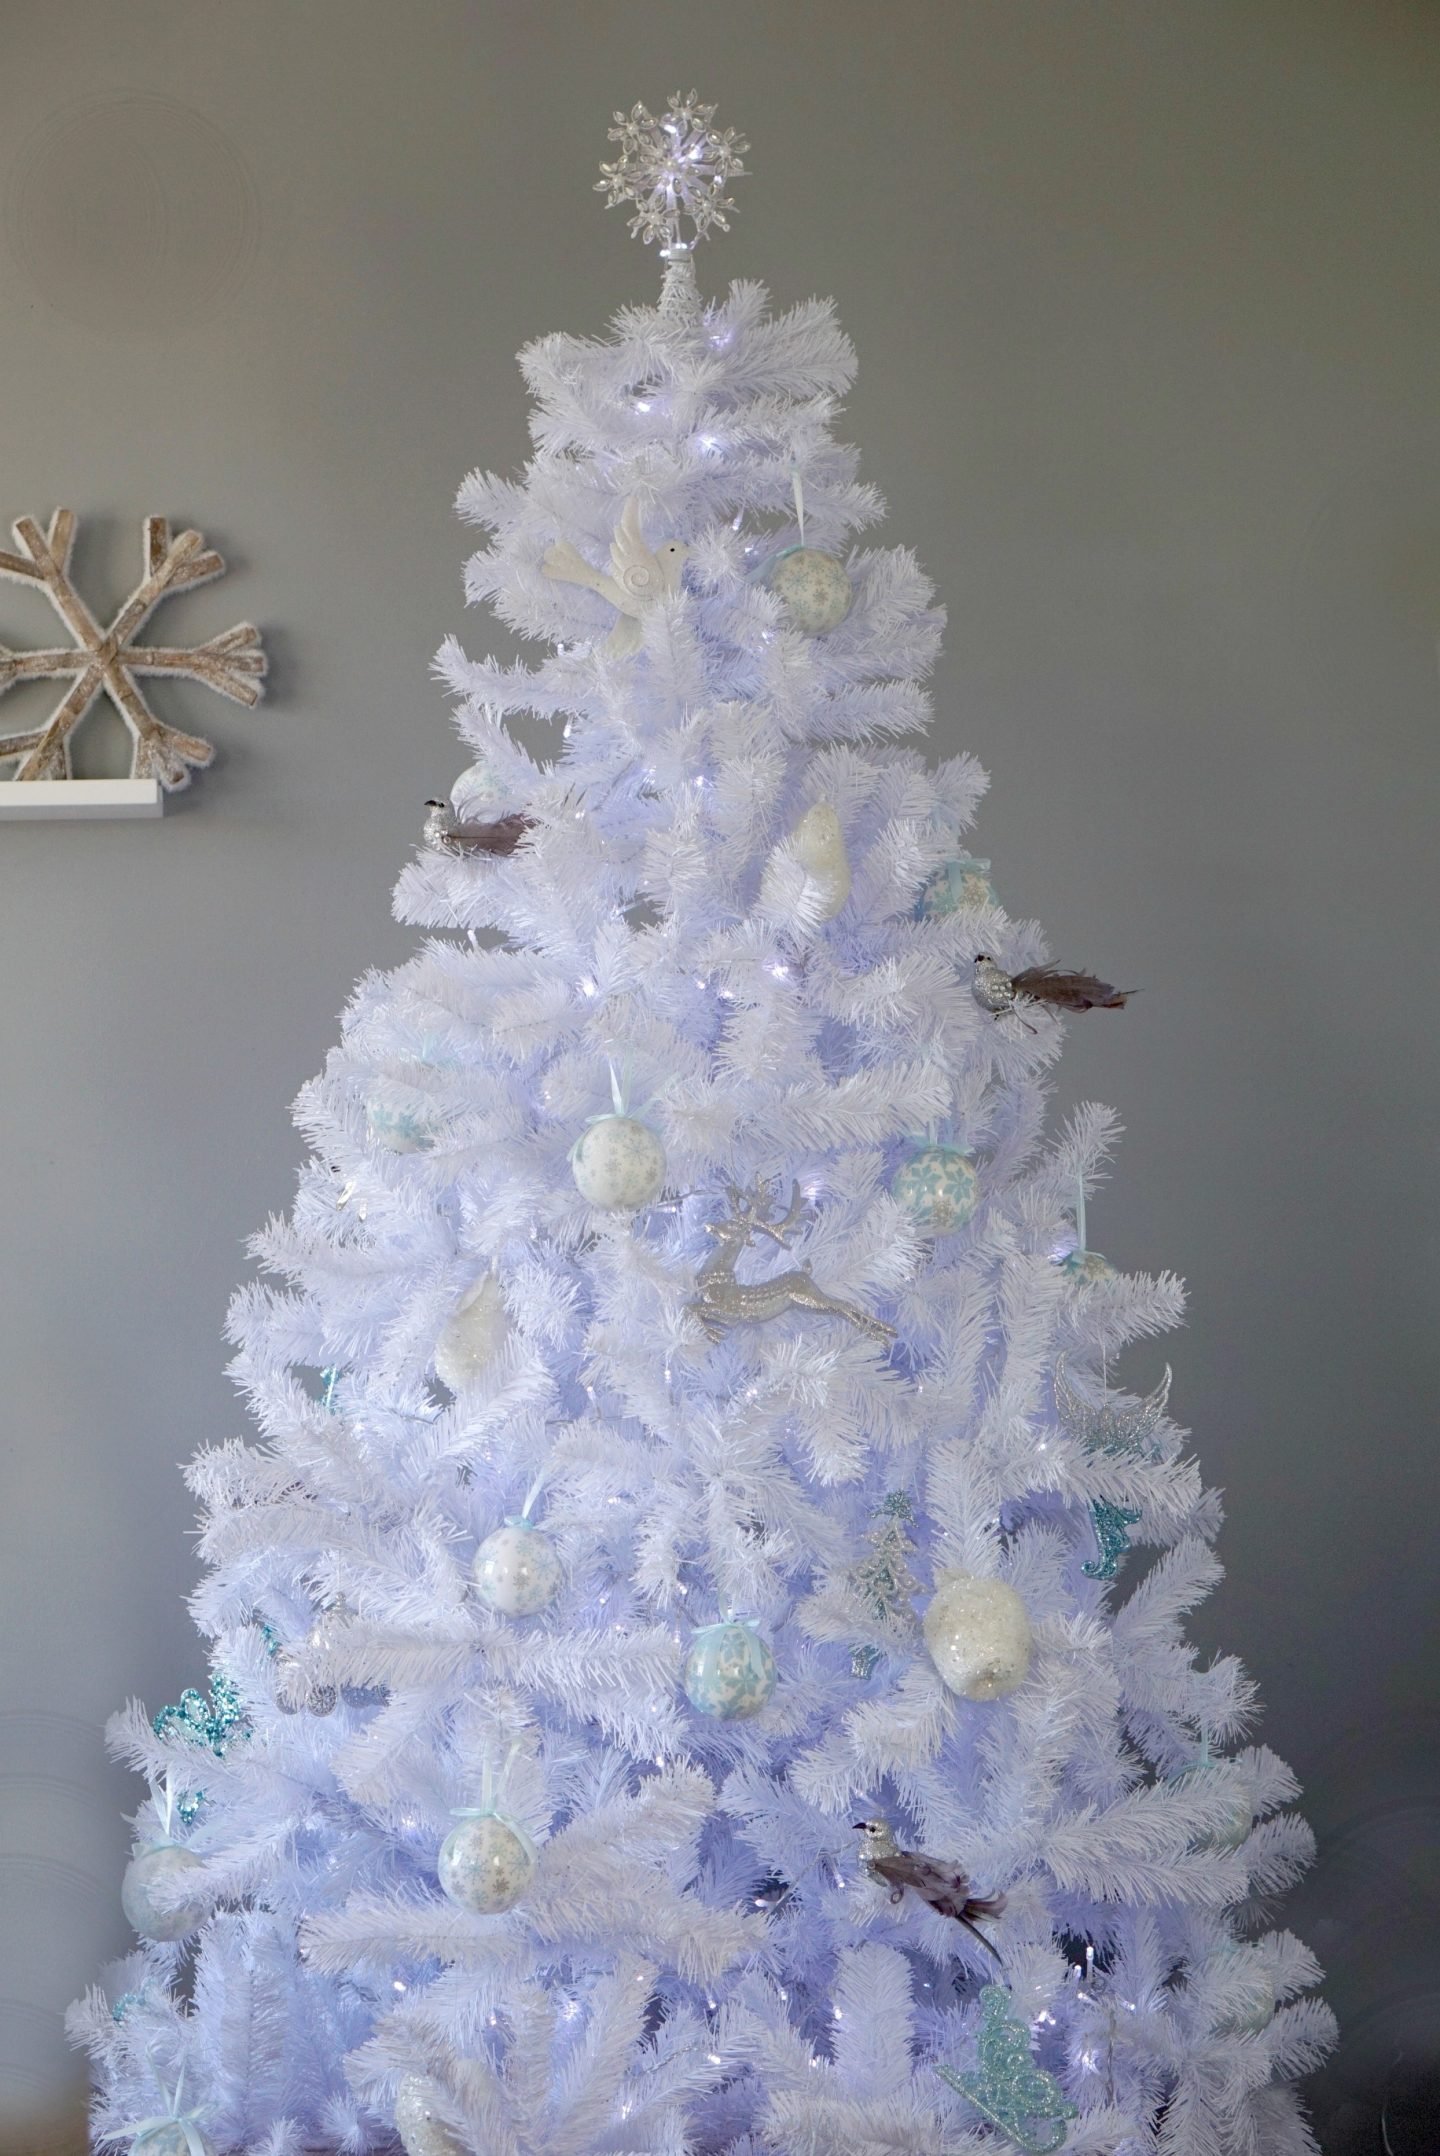 White Christmas Tree and Decorations www.extraordinarychaos.com